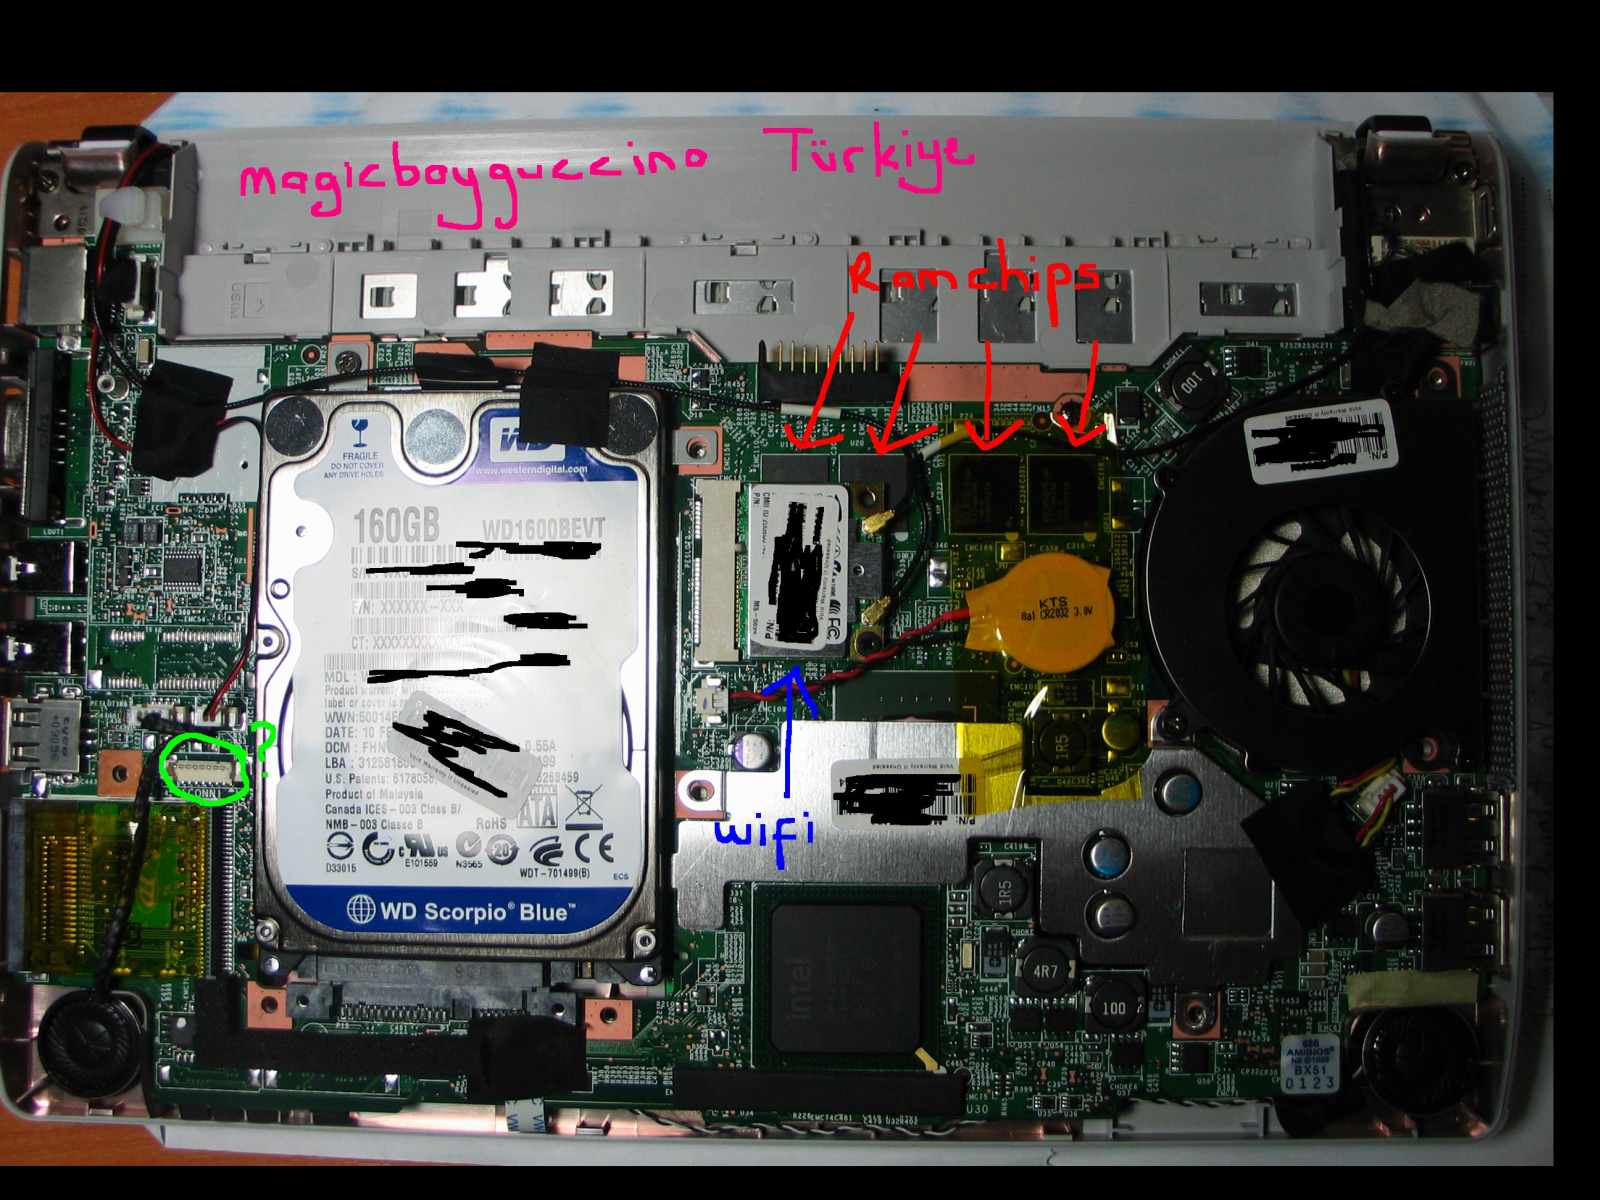  LG X110 2 GB RAM TAKILAMIYOR MALESEF!